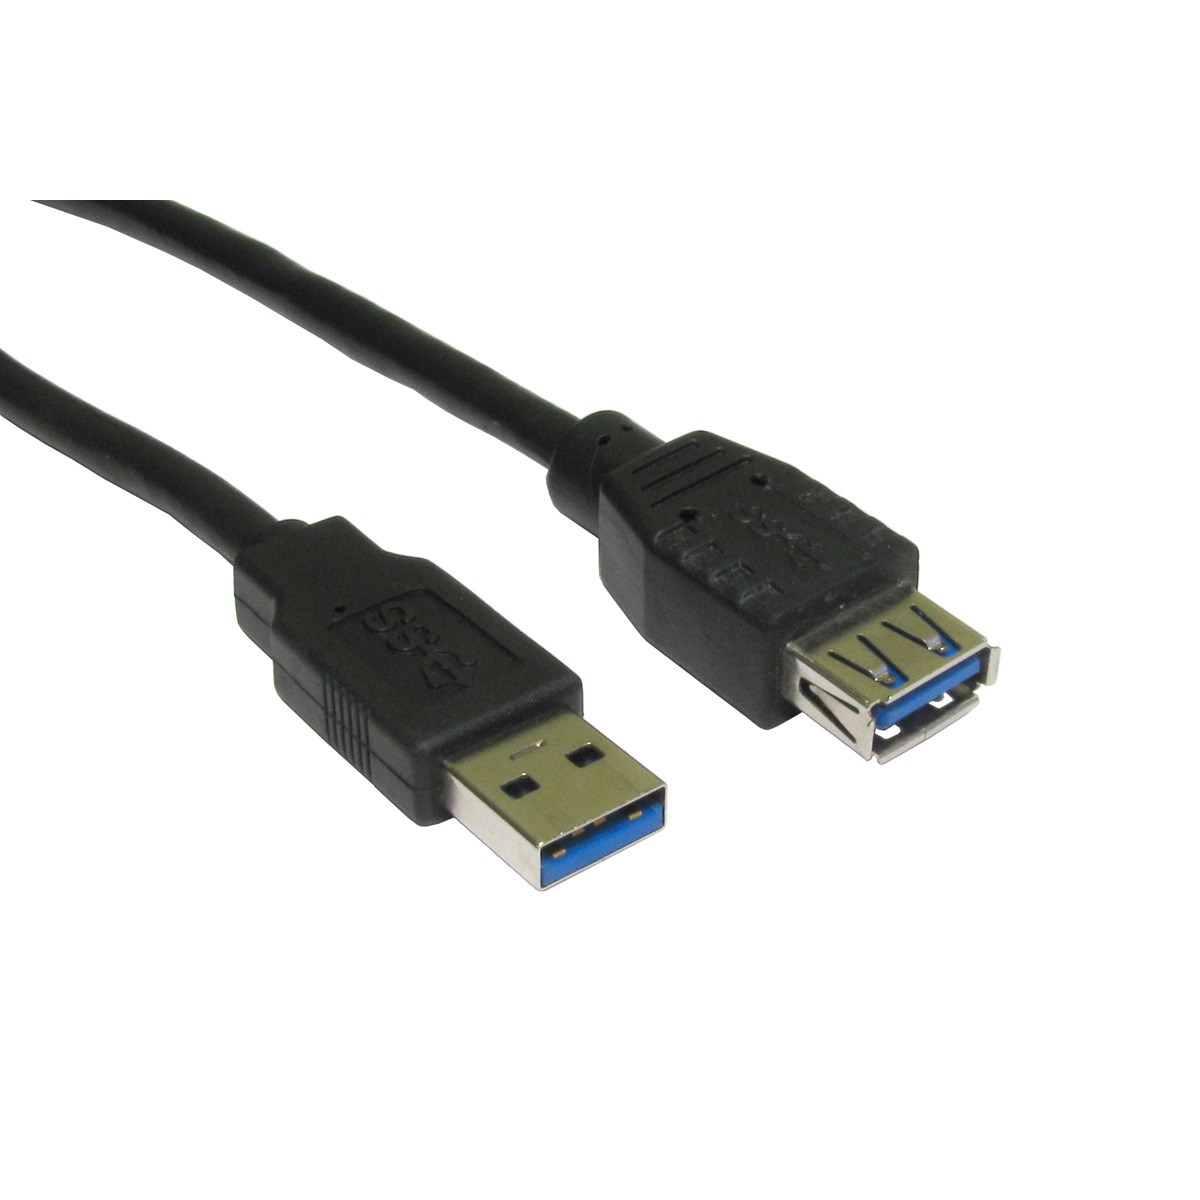 Photos - Cable (video, audio, USB) Cables Direct 2m USB 3.0 Extension Cable - Black USB3-822 